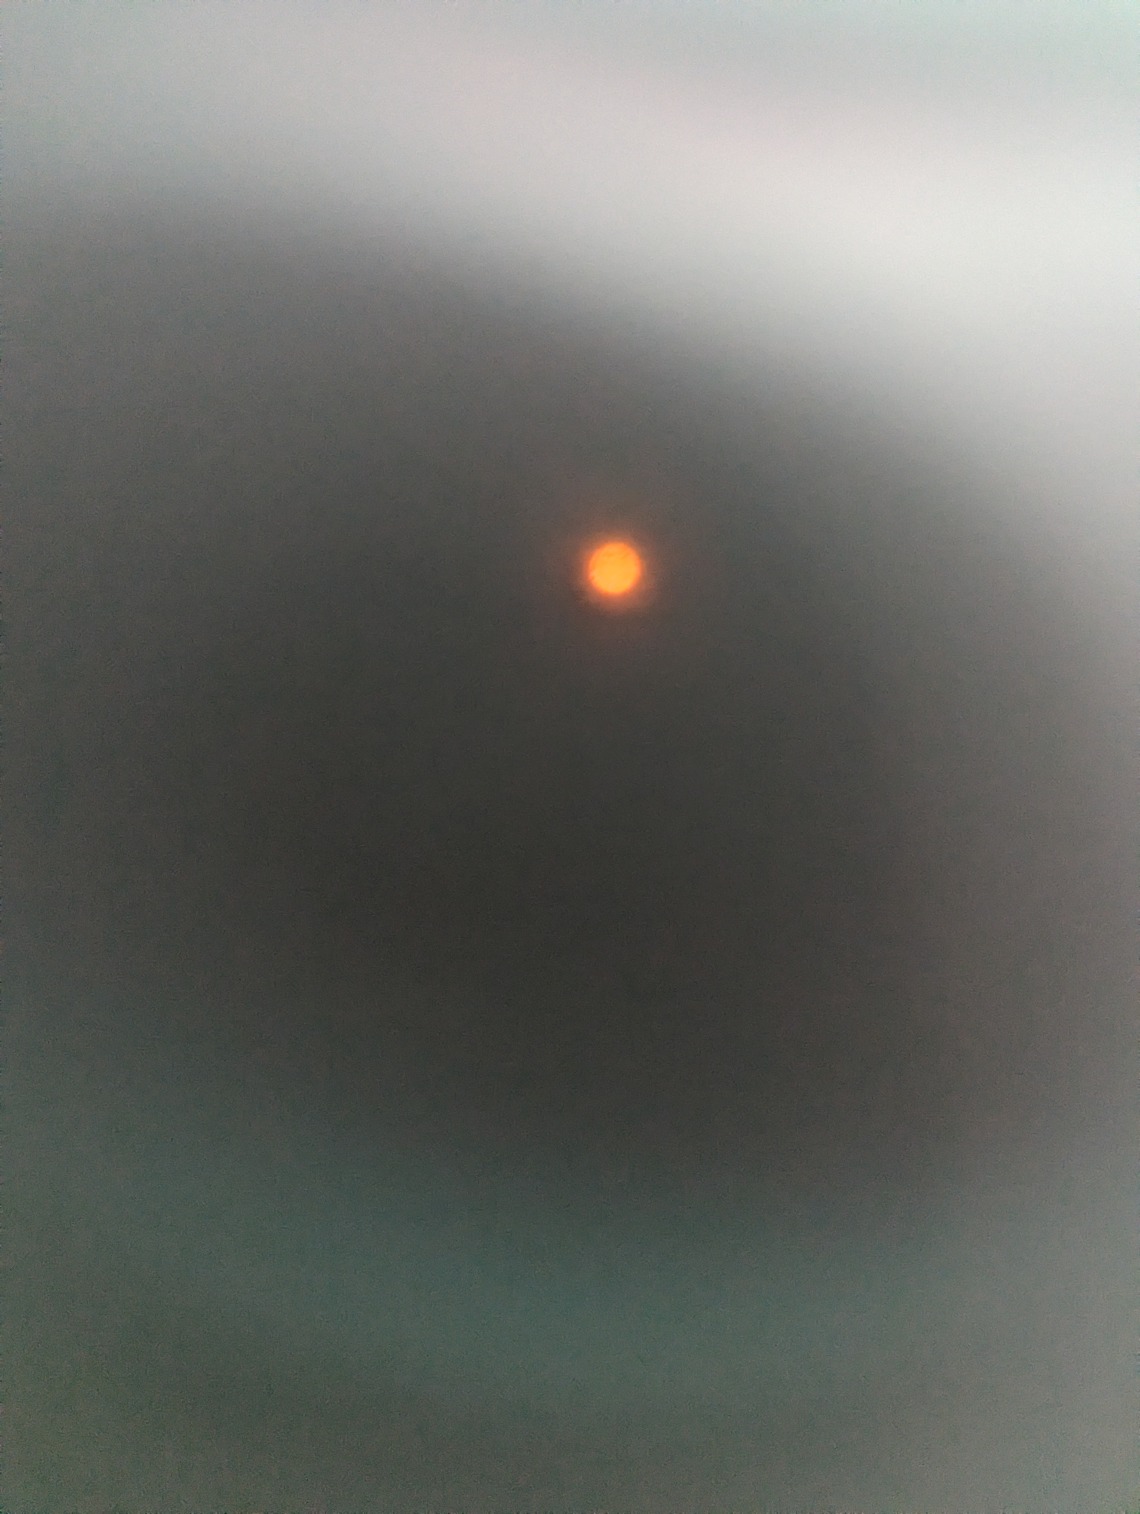 Walter Rahmer's Pinhole Camera Captures the Solar Eclipse